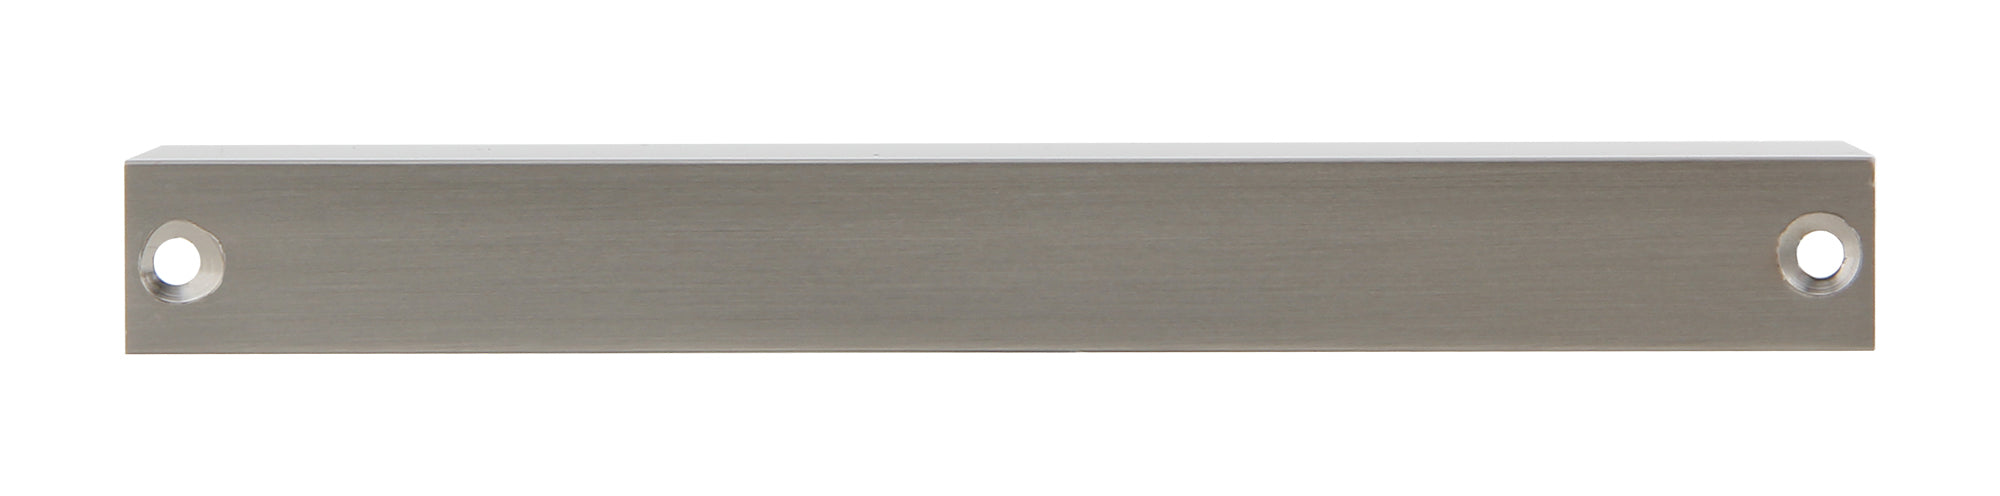 Silverline P1001 Aluminum Mount Finger Edge Tab Pull Handle in Brushed Satin Nickel Finish Various Sizes